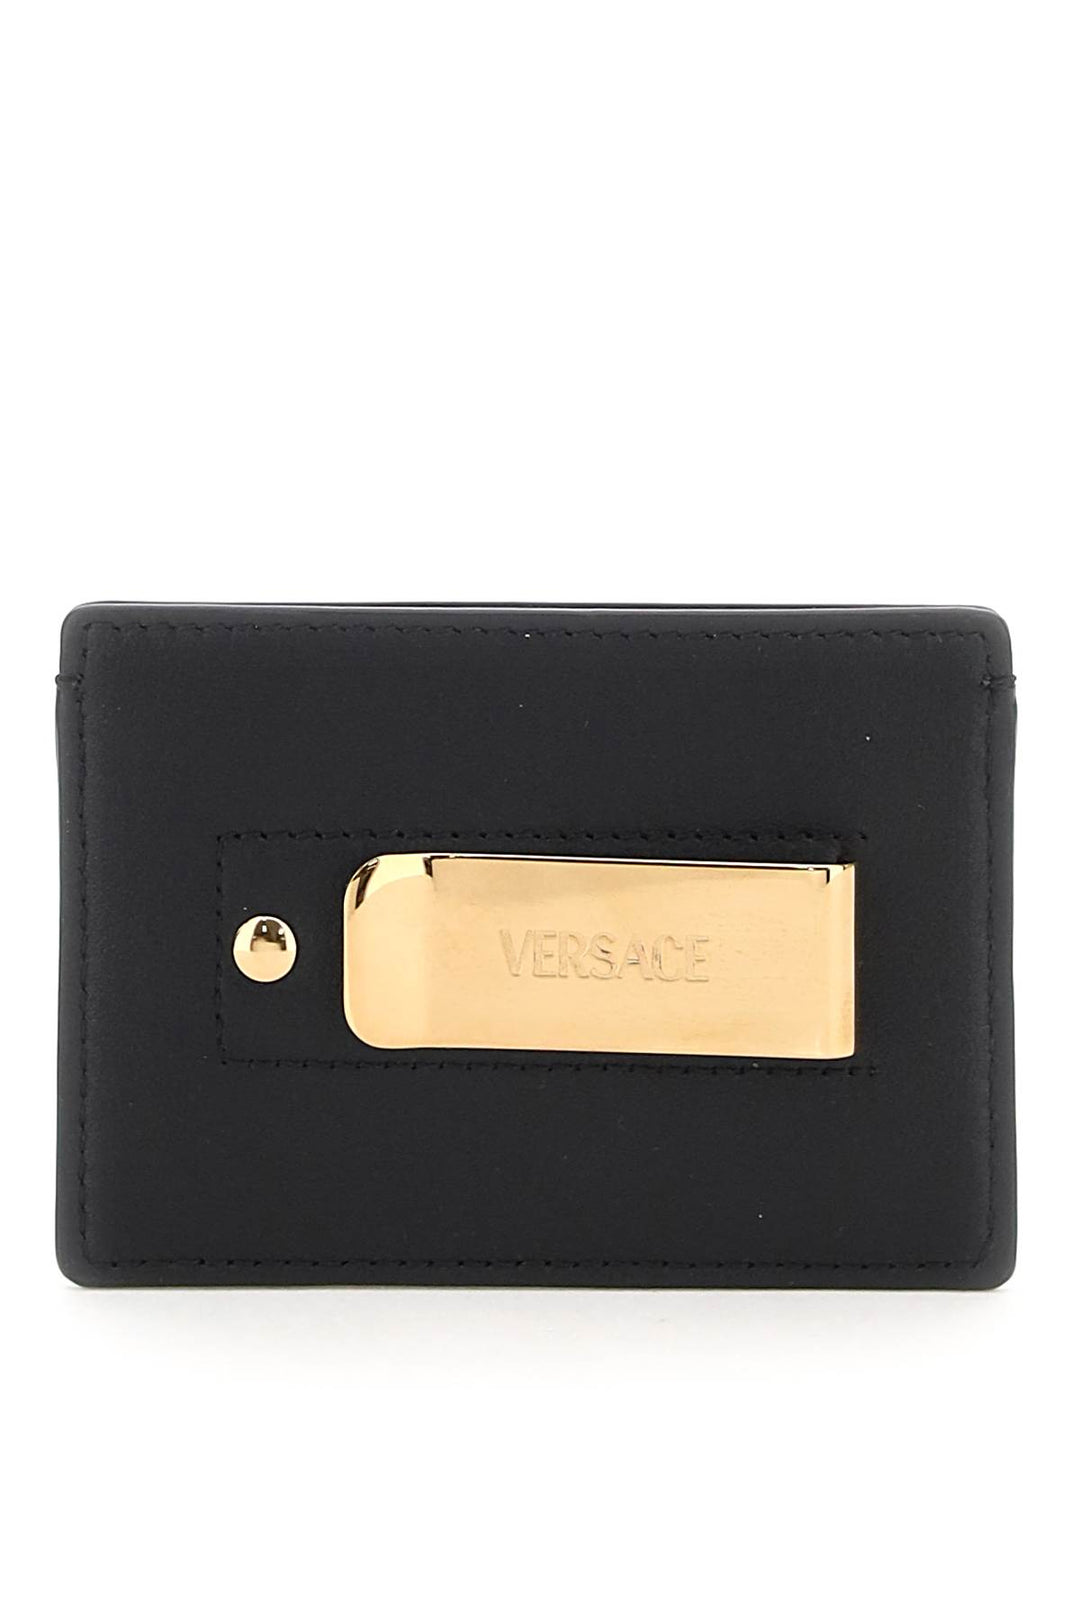 Versace Leather Medusa Cardholder   Nero